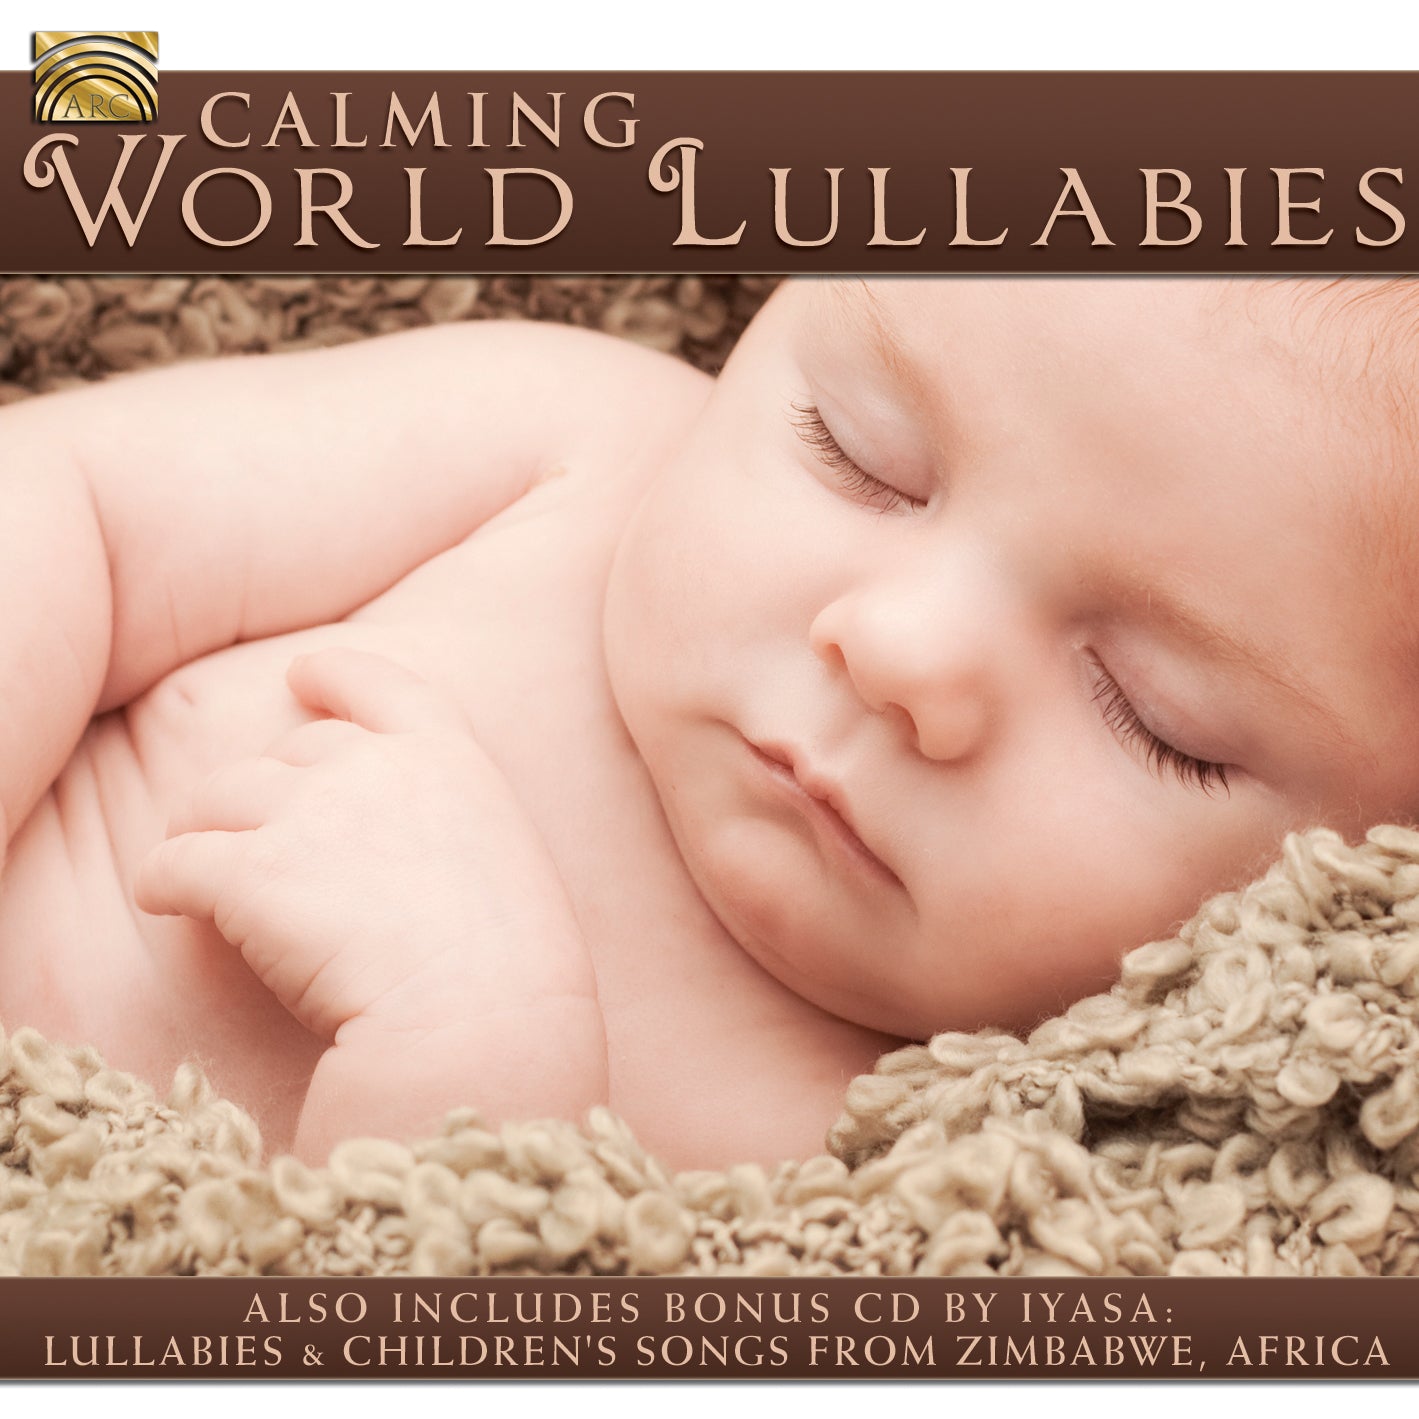 Calming World Lullabies  Iyasa, Mcmahon, Gondwana, Kurbits, Kalapana, Shir, Carter, Burning Bush, Romanskaya, Butler, Hasegaw